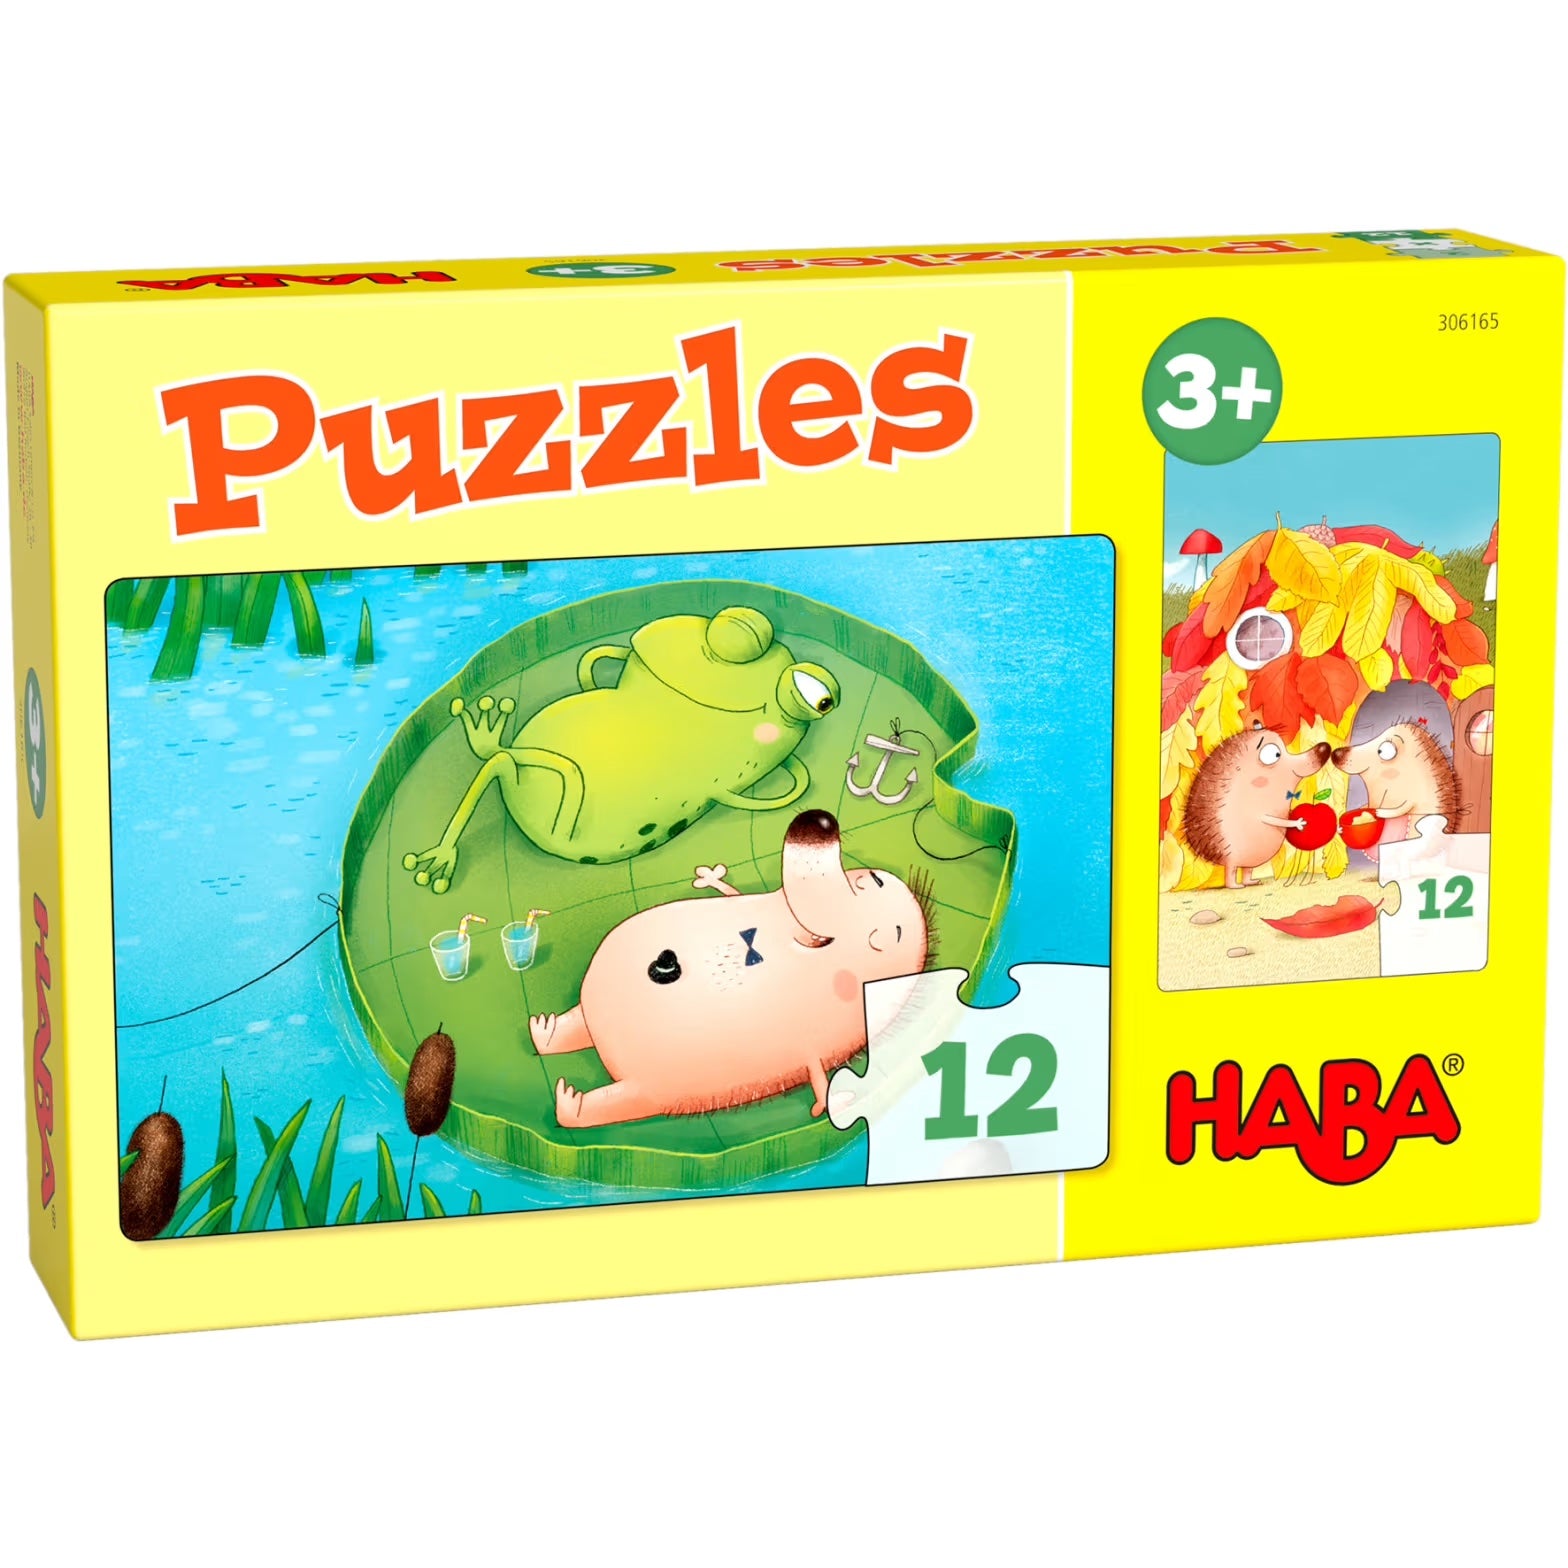 Haba - Puzzles Herr Igel